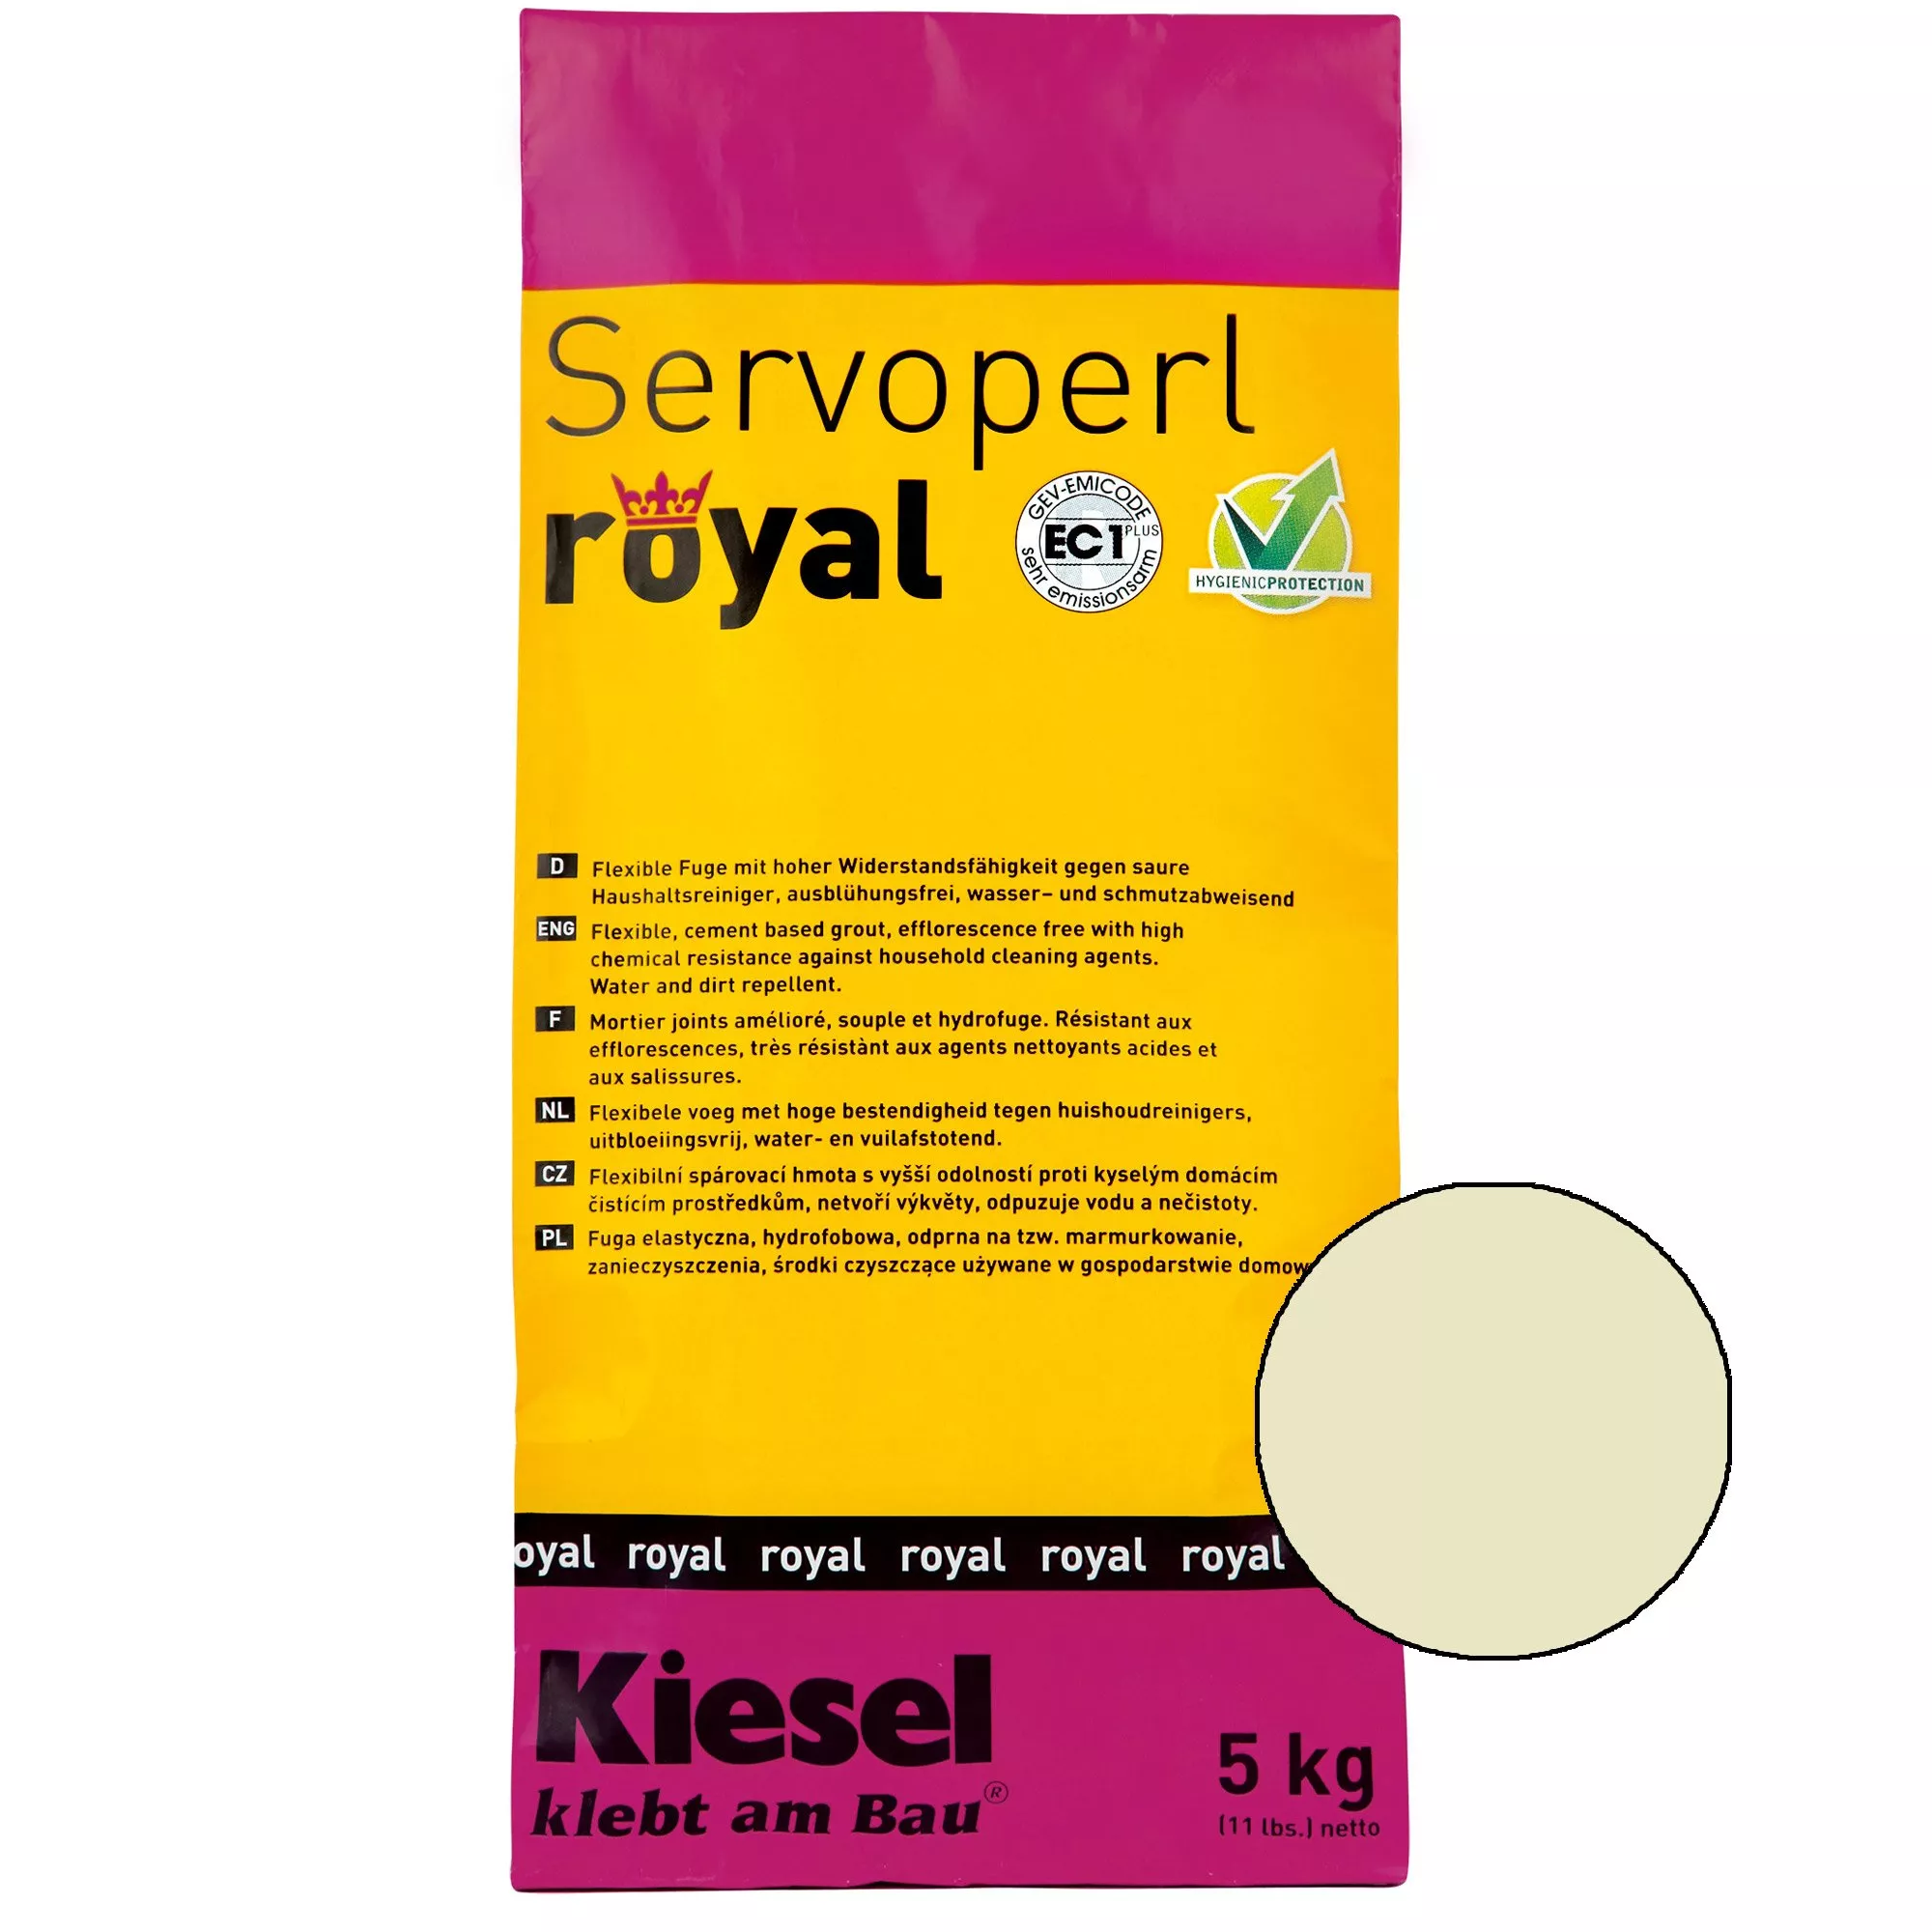 Kiesel Servoperl royal - flexible, water- and dirt-repellent joint (5KG jasmine)